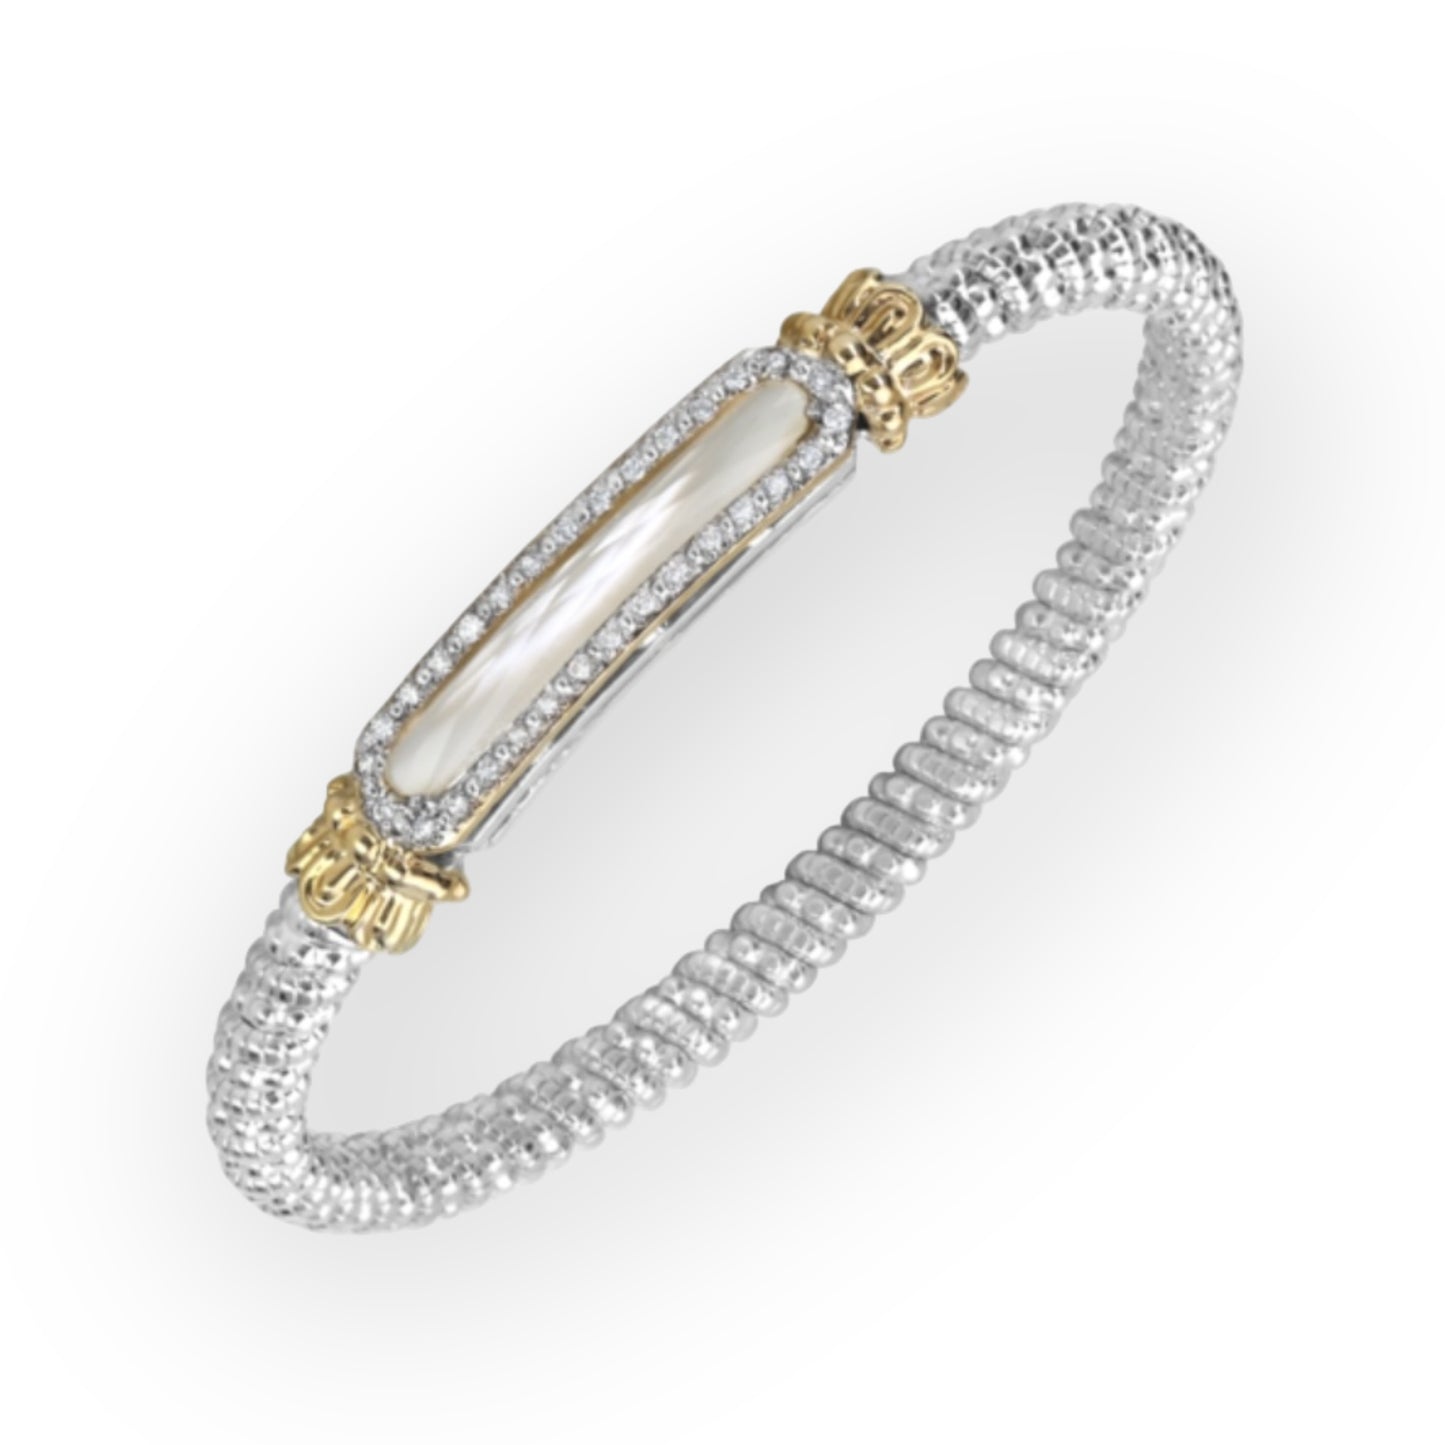 Vahan 14K Gold and Sterling Silver Mother of Pearl Bangle Bracelet